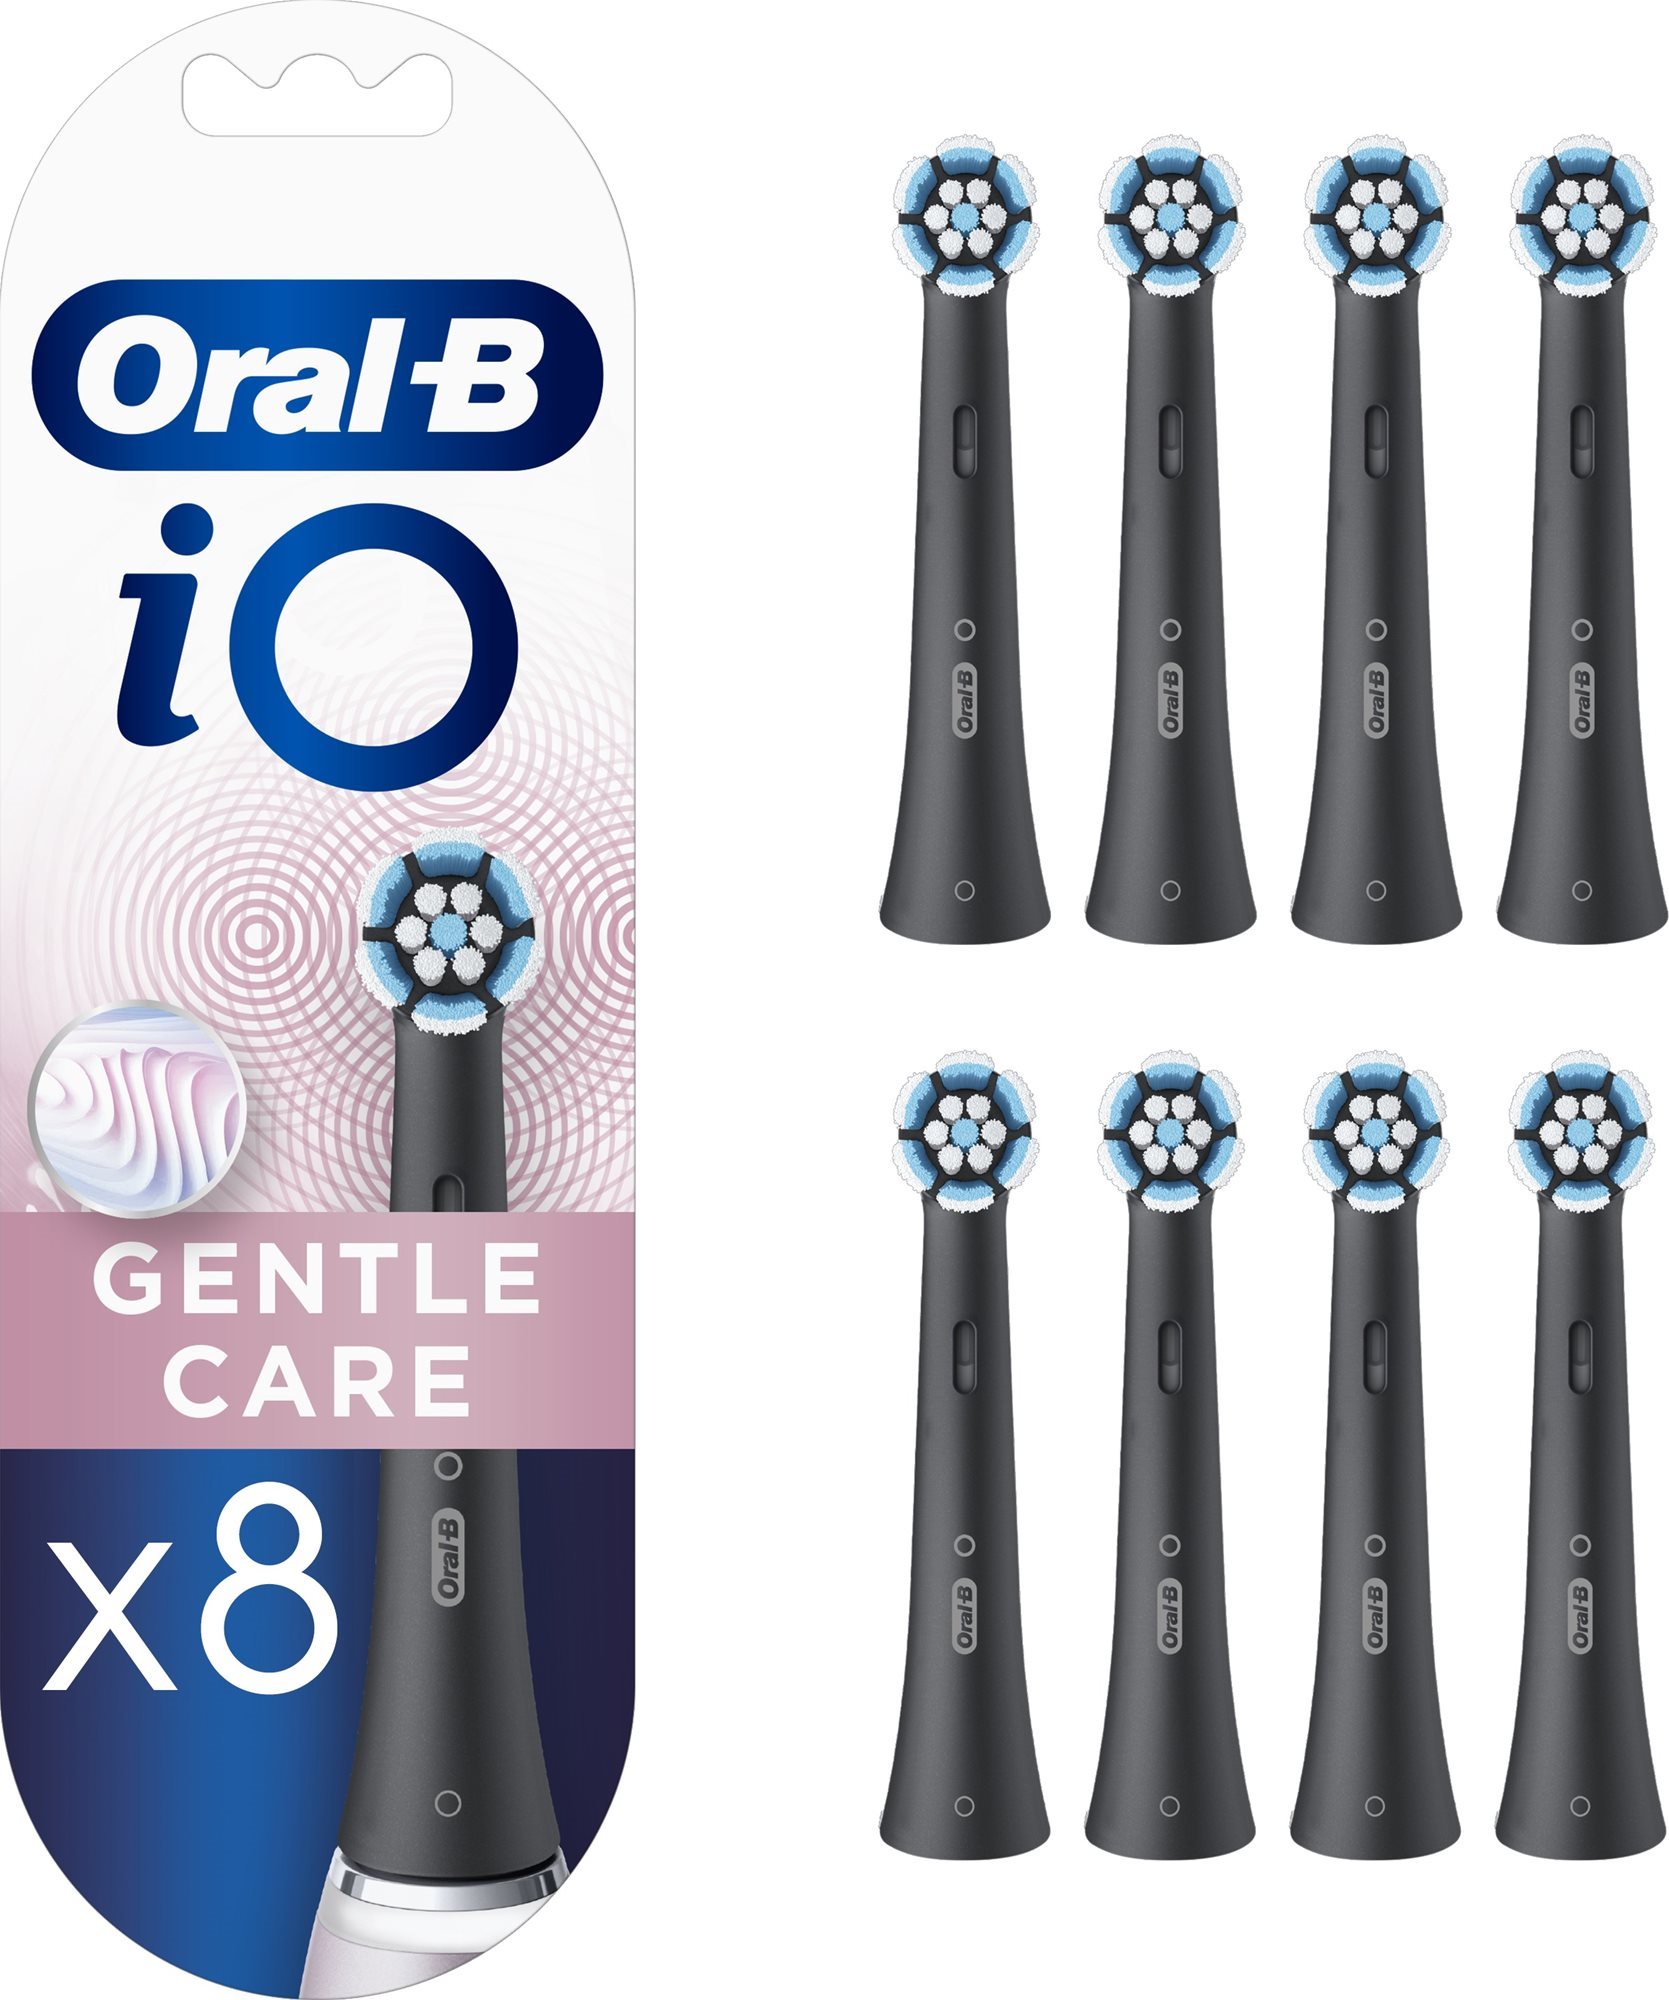 Oral-B iO Gentle Care Kefefej, 4 db-os csomag + Oral-B iO Gentle Care Kefefej, 4 db-os csomag